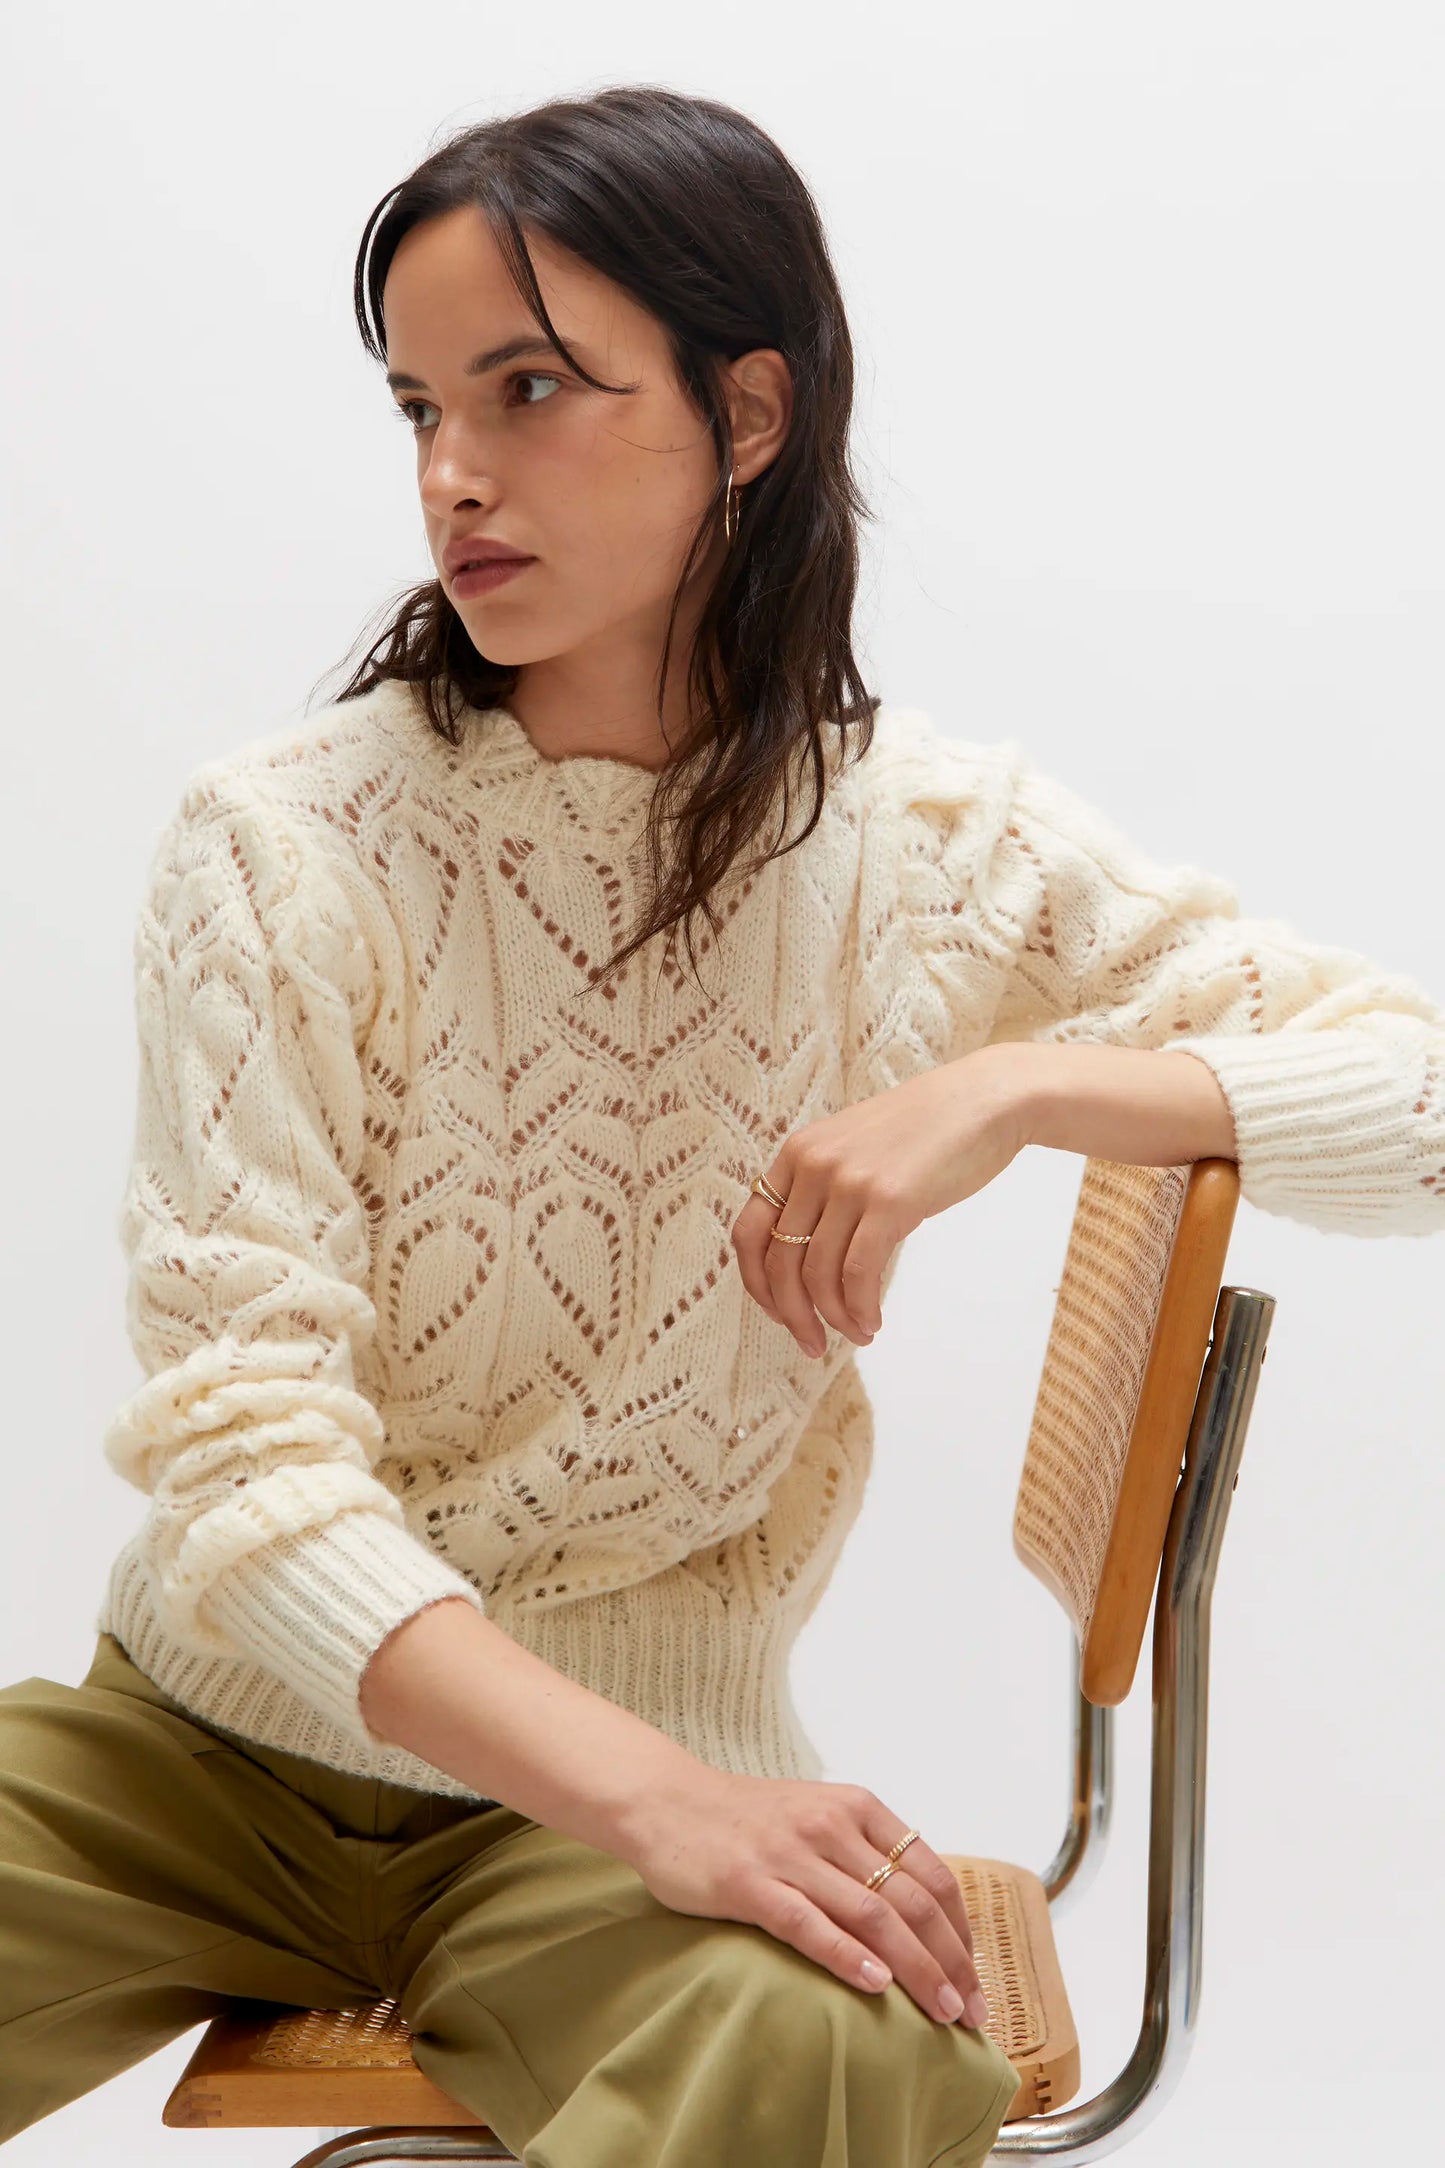 White openwork knit sweater